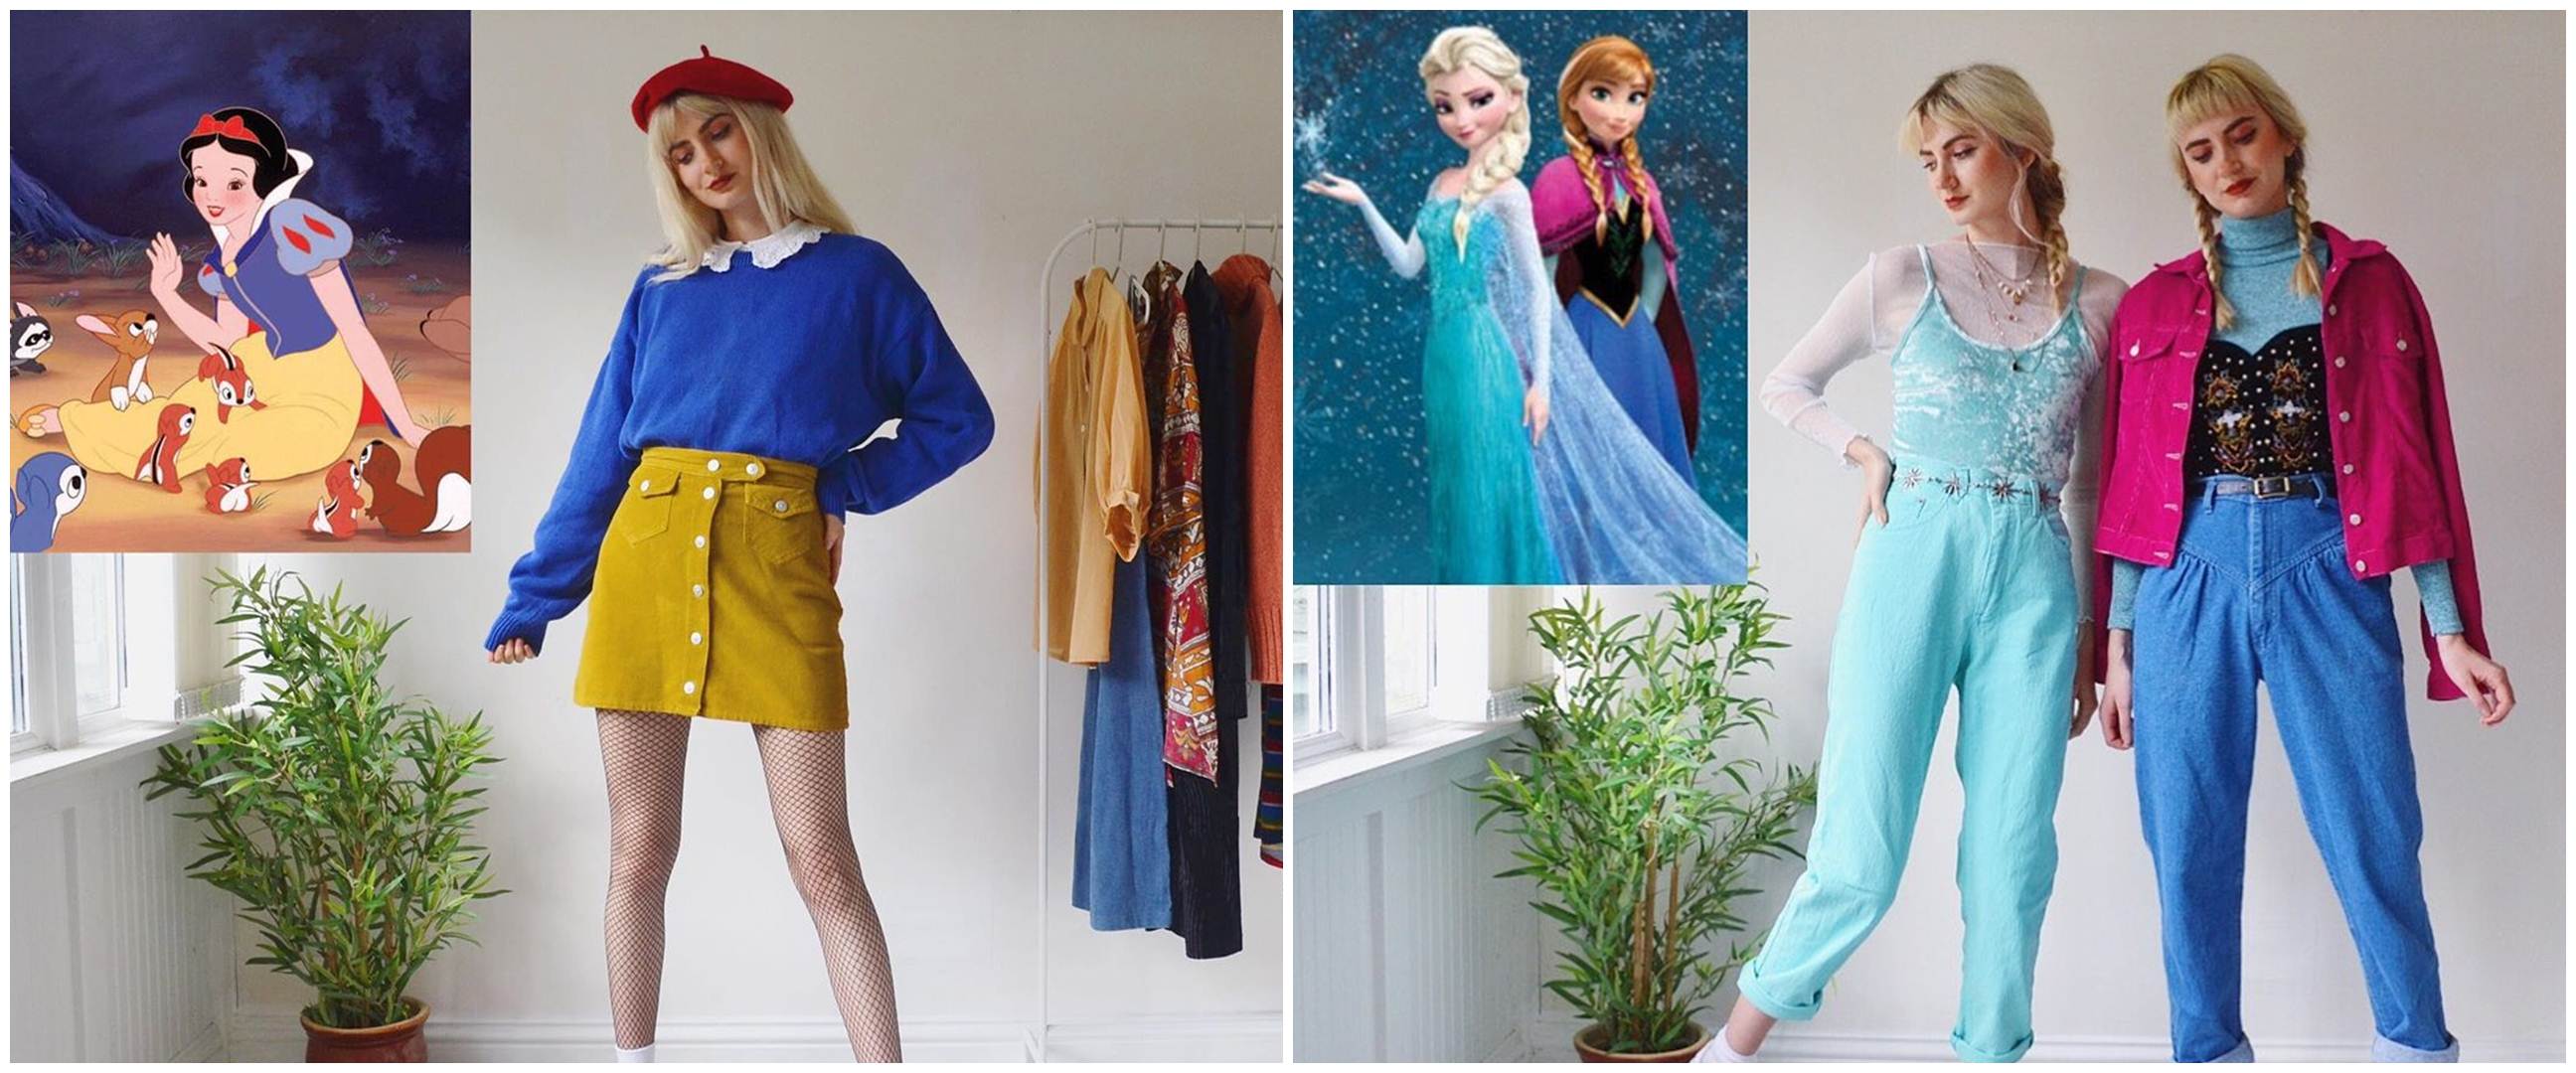 Potret gaun 10 putri Disney diubah jadi outfit kekinian, stylish